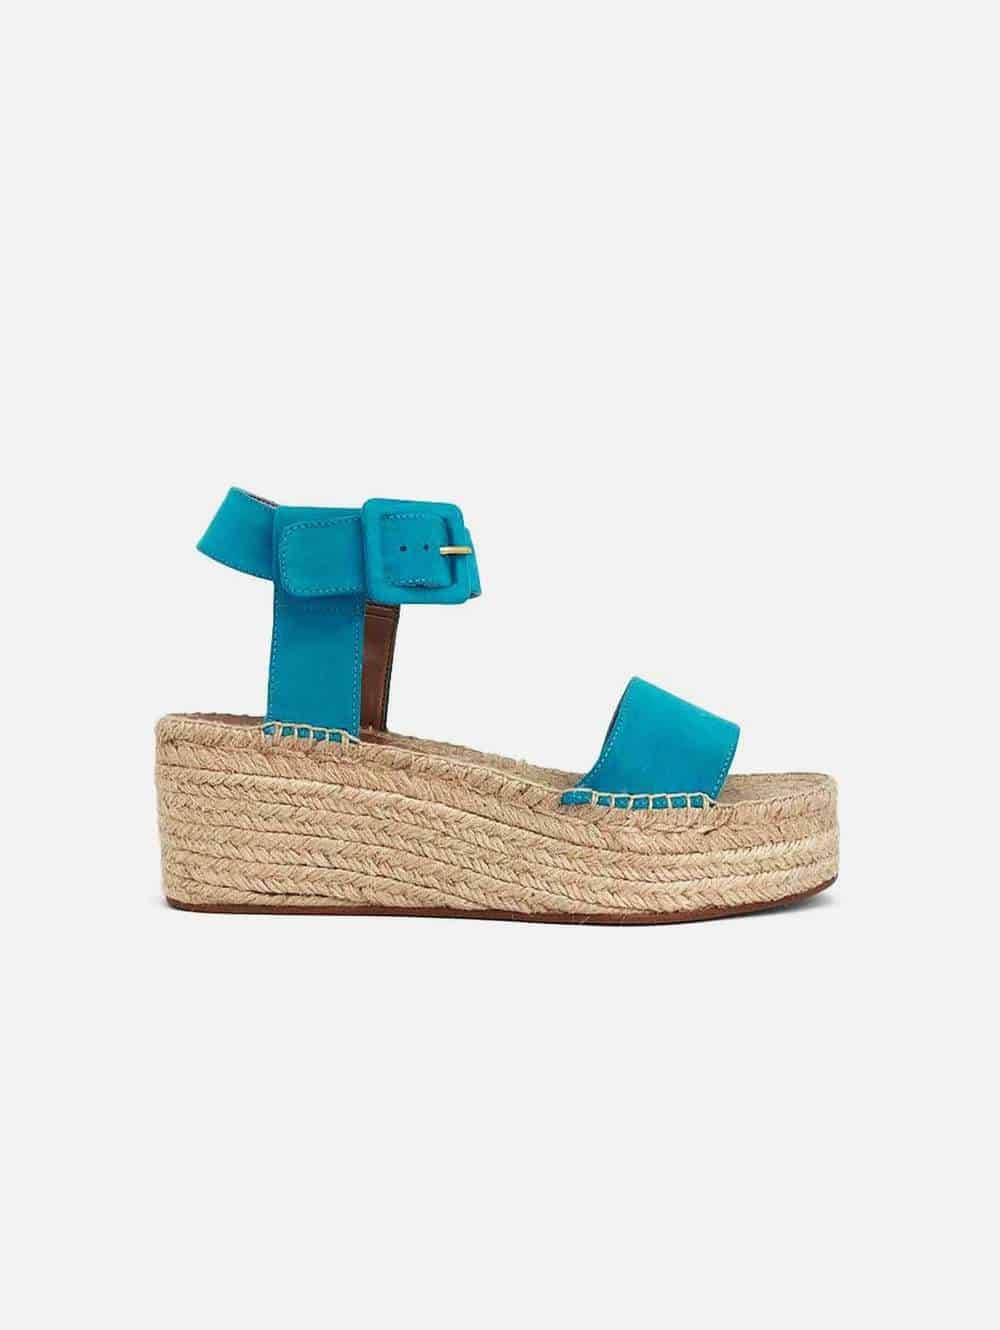 Blue platform vegan sandals with jute sole